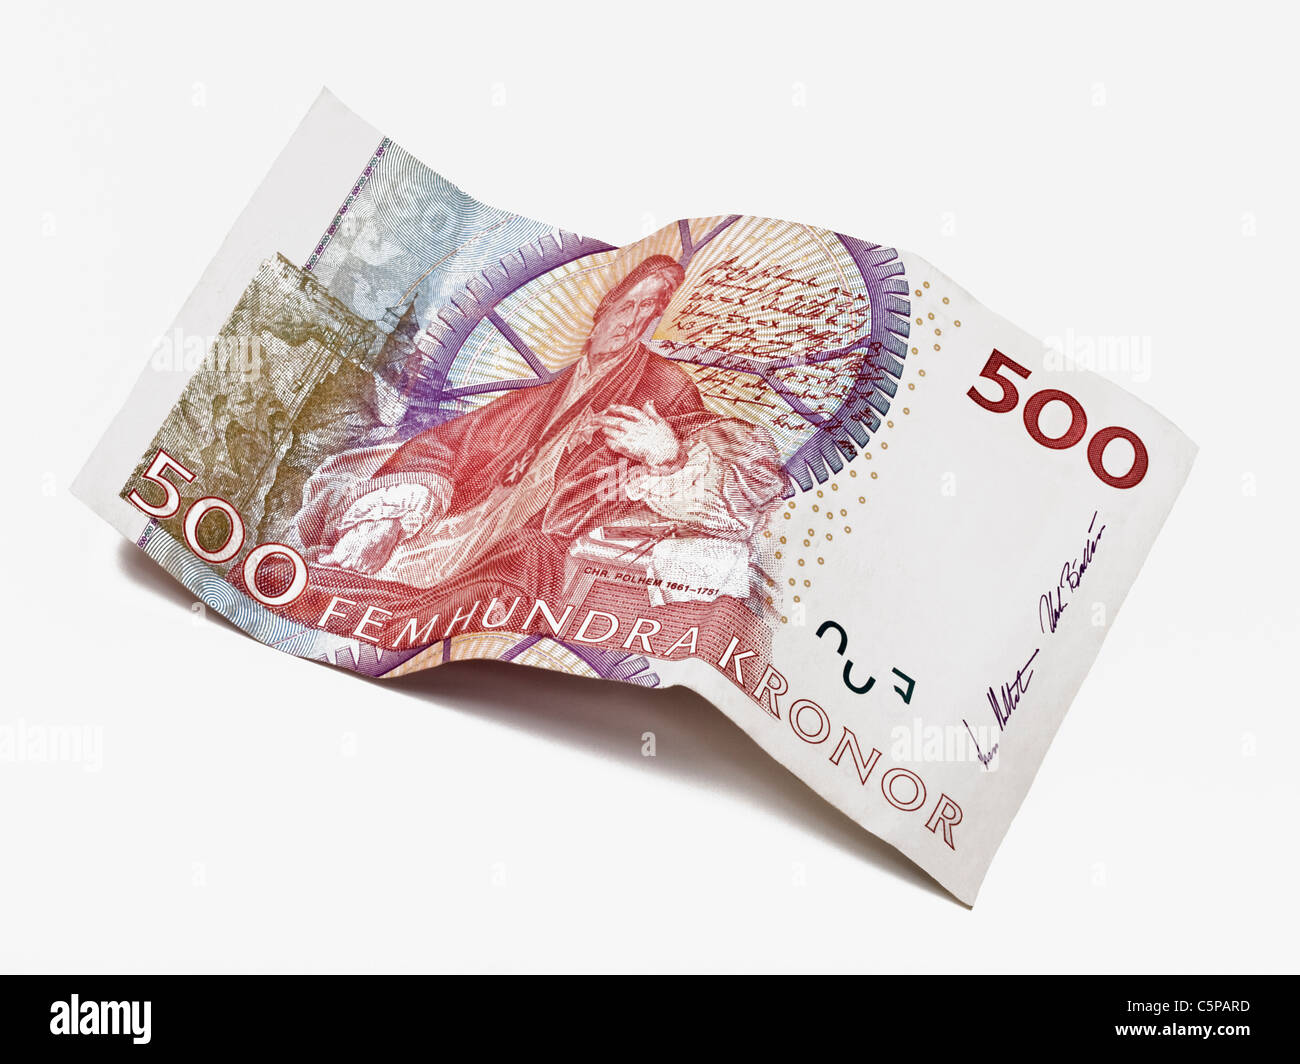 Detailansicht schwedischen von 500 Kronen | photo de détail 500 Couronne suédoise Banque D'Images